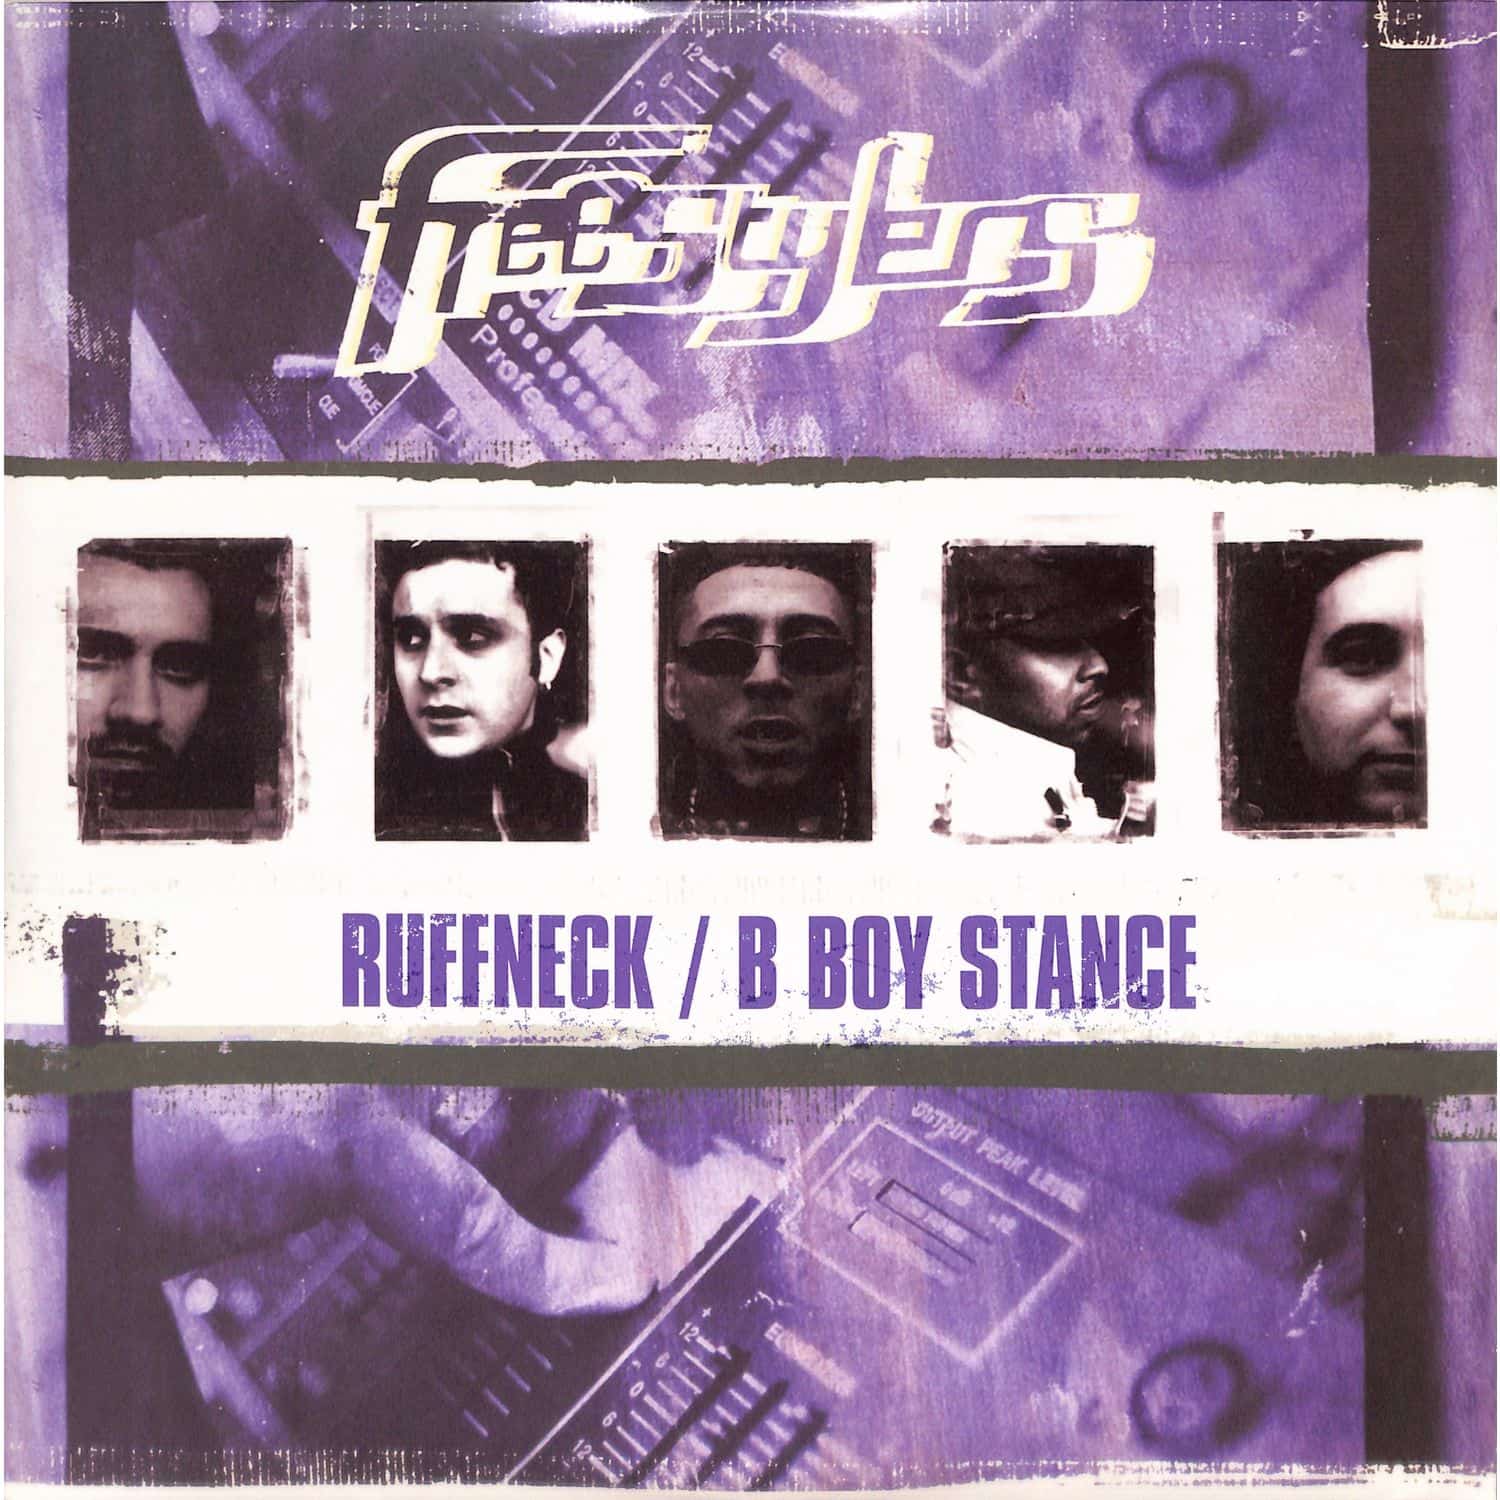 Freestylers - RUFFNECK / B BOY STANCE